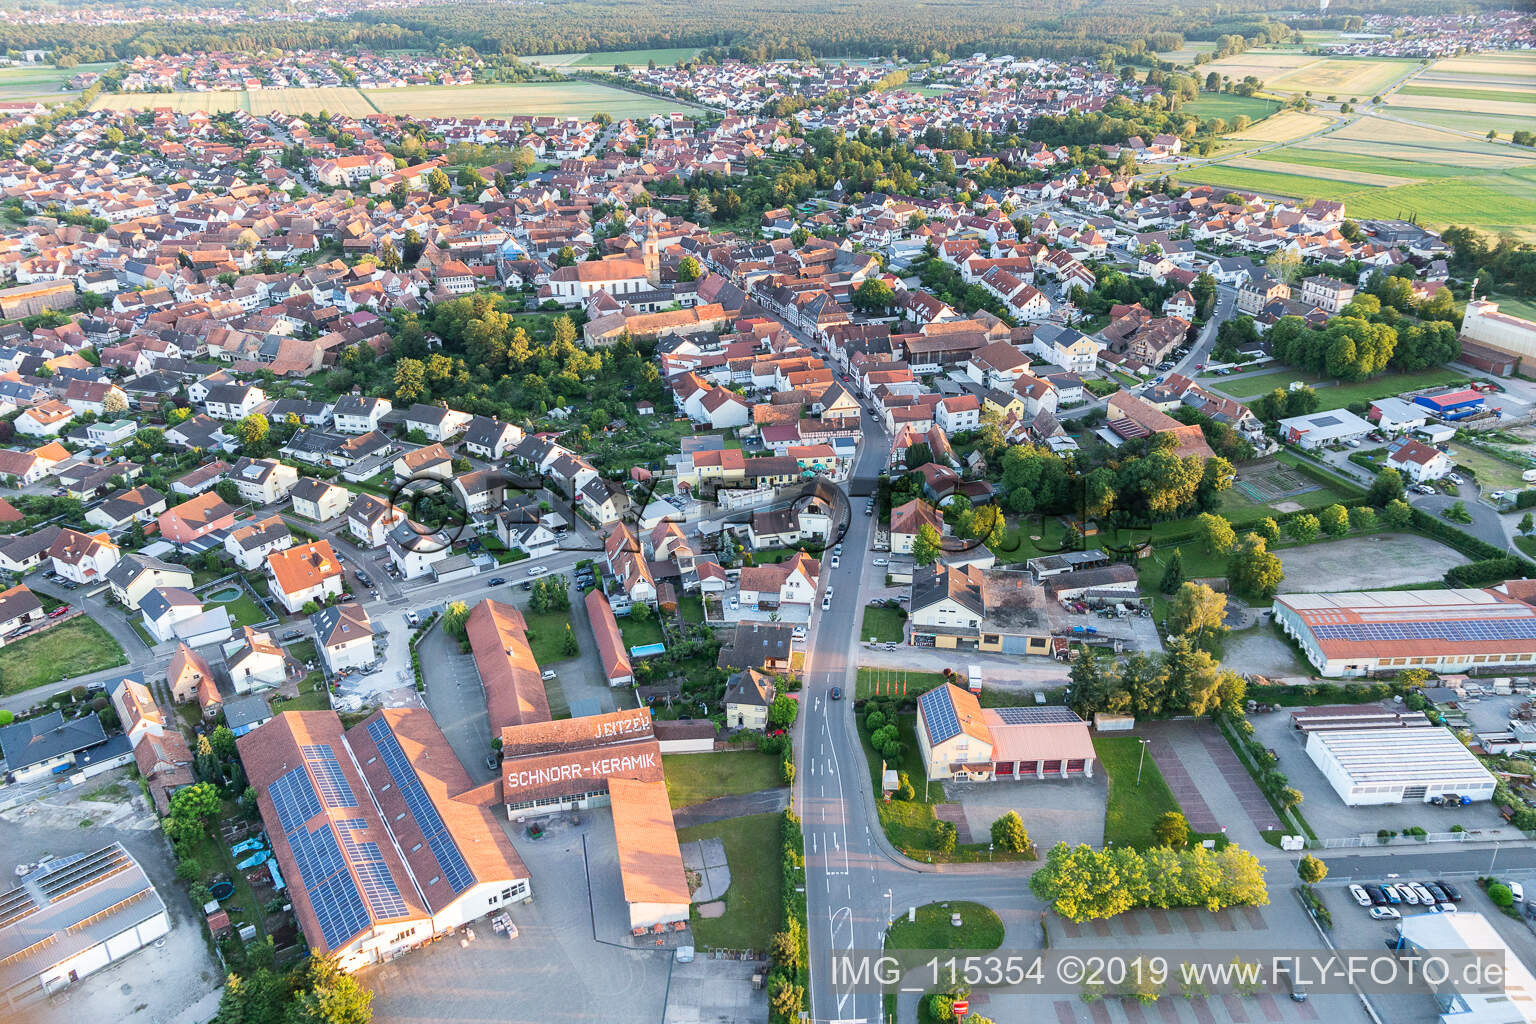 Rheinzabern in the state Rhineland-Palatinate, Germany from a drone